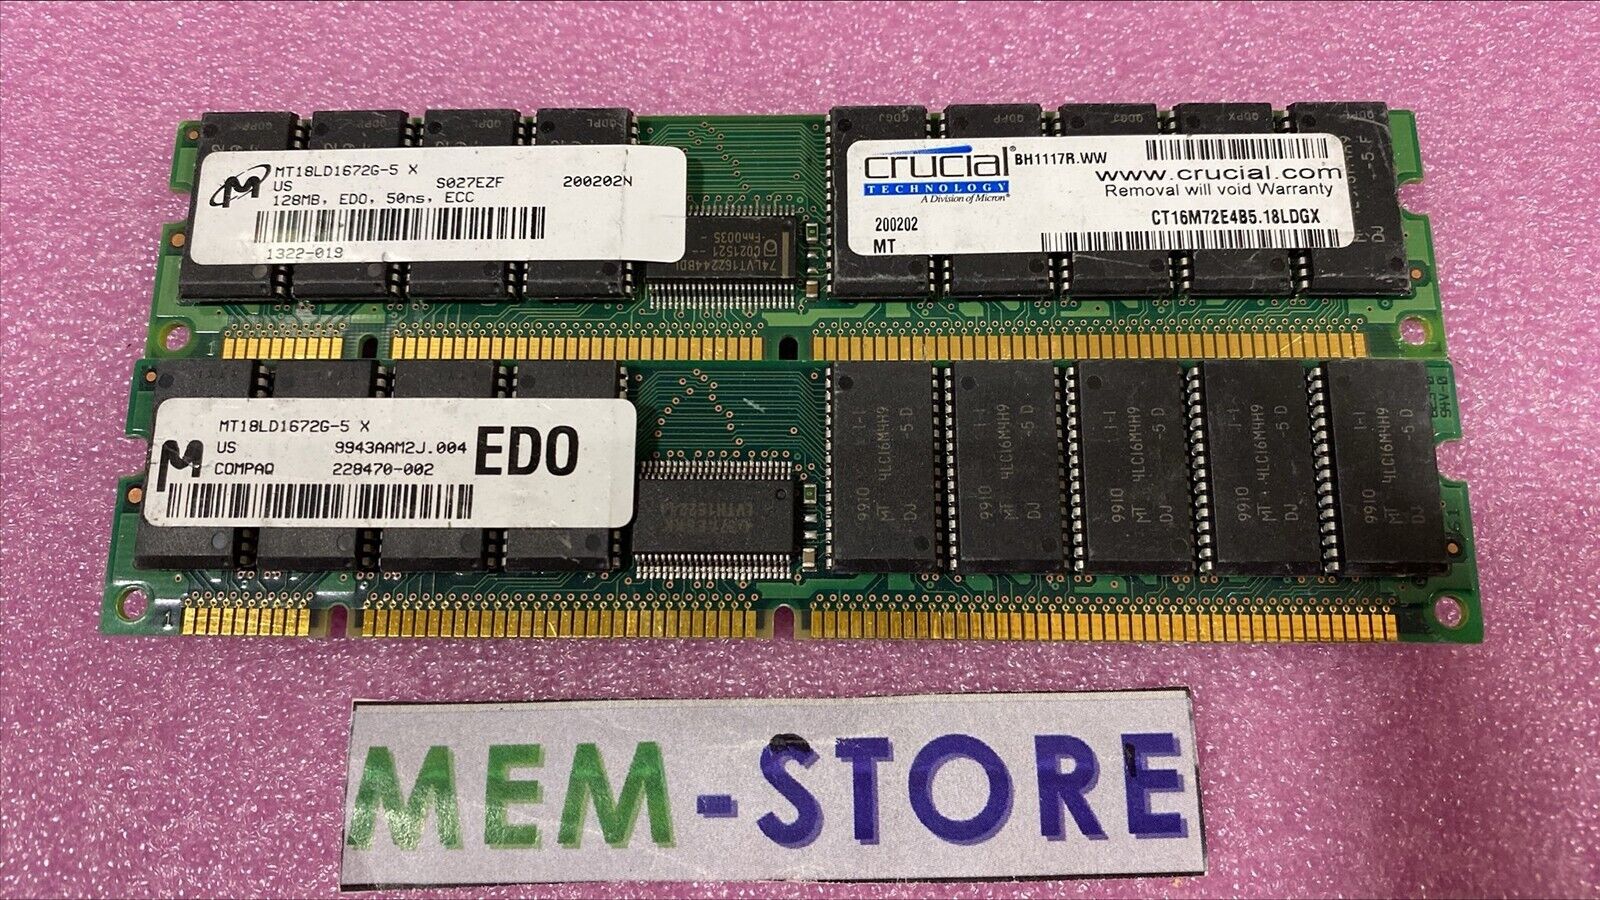 Micron MT18LD1672G-5-X 256MB 2x128MB Buffered ECC EDO DIMM 168-pin Memory RAM